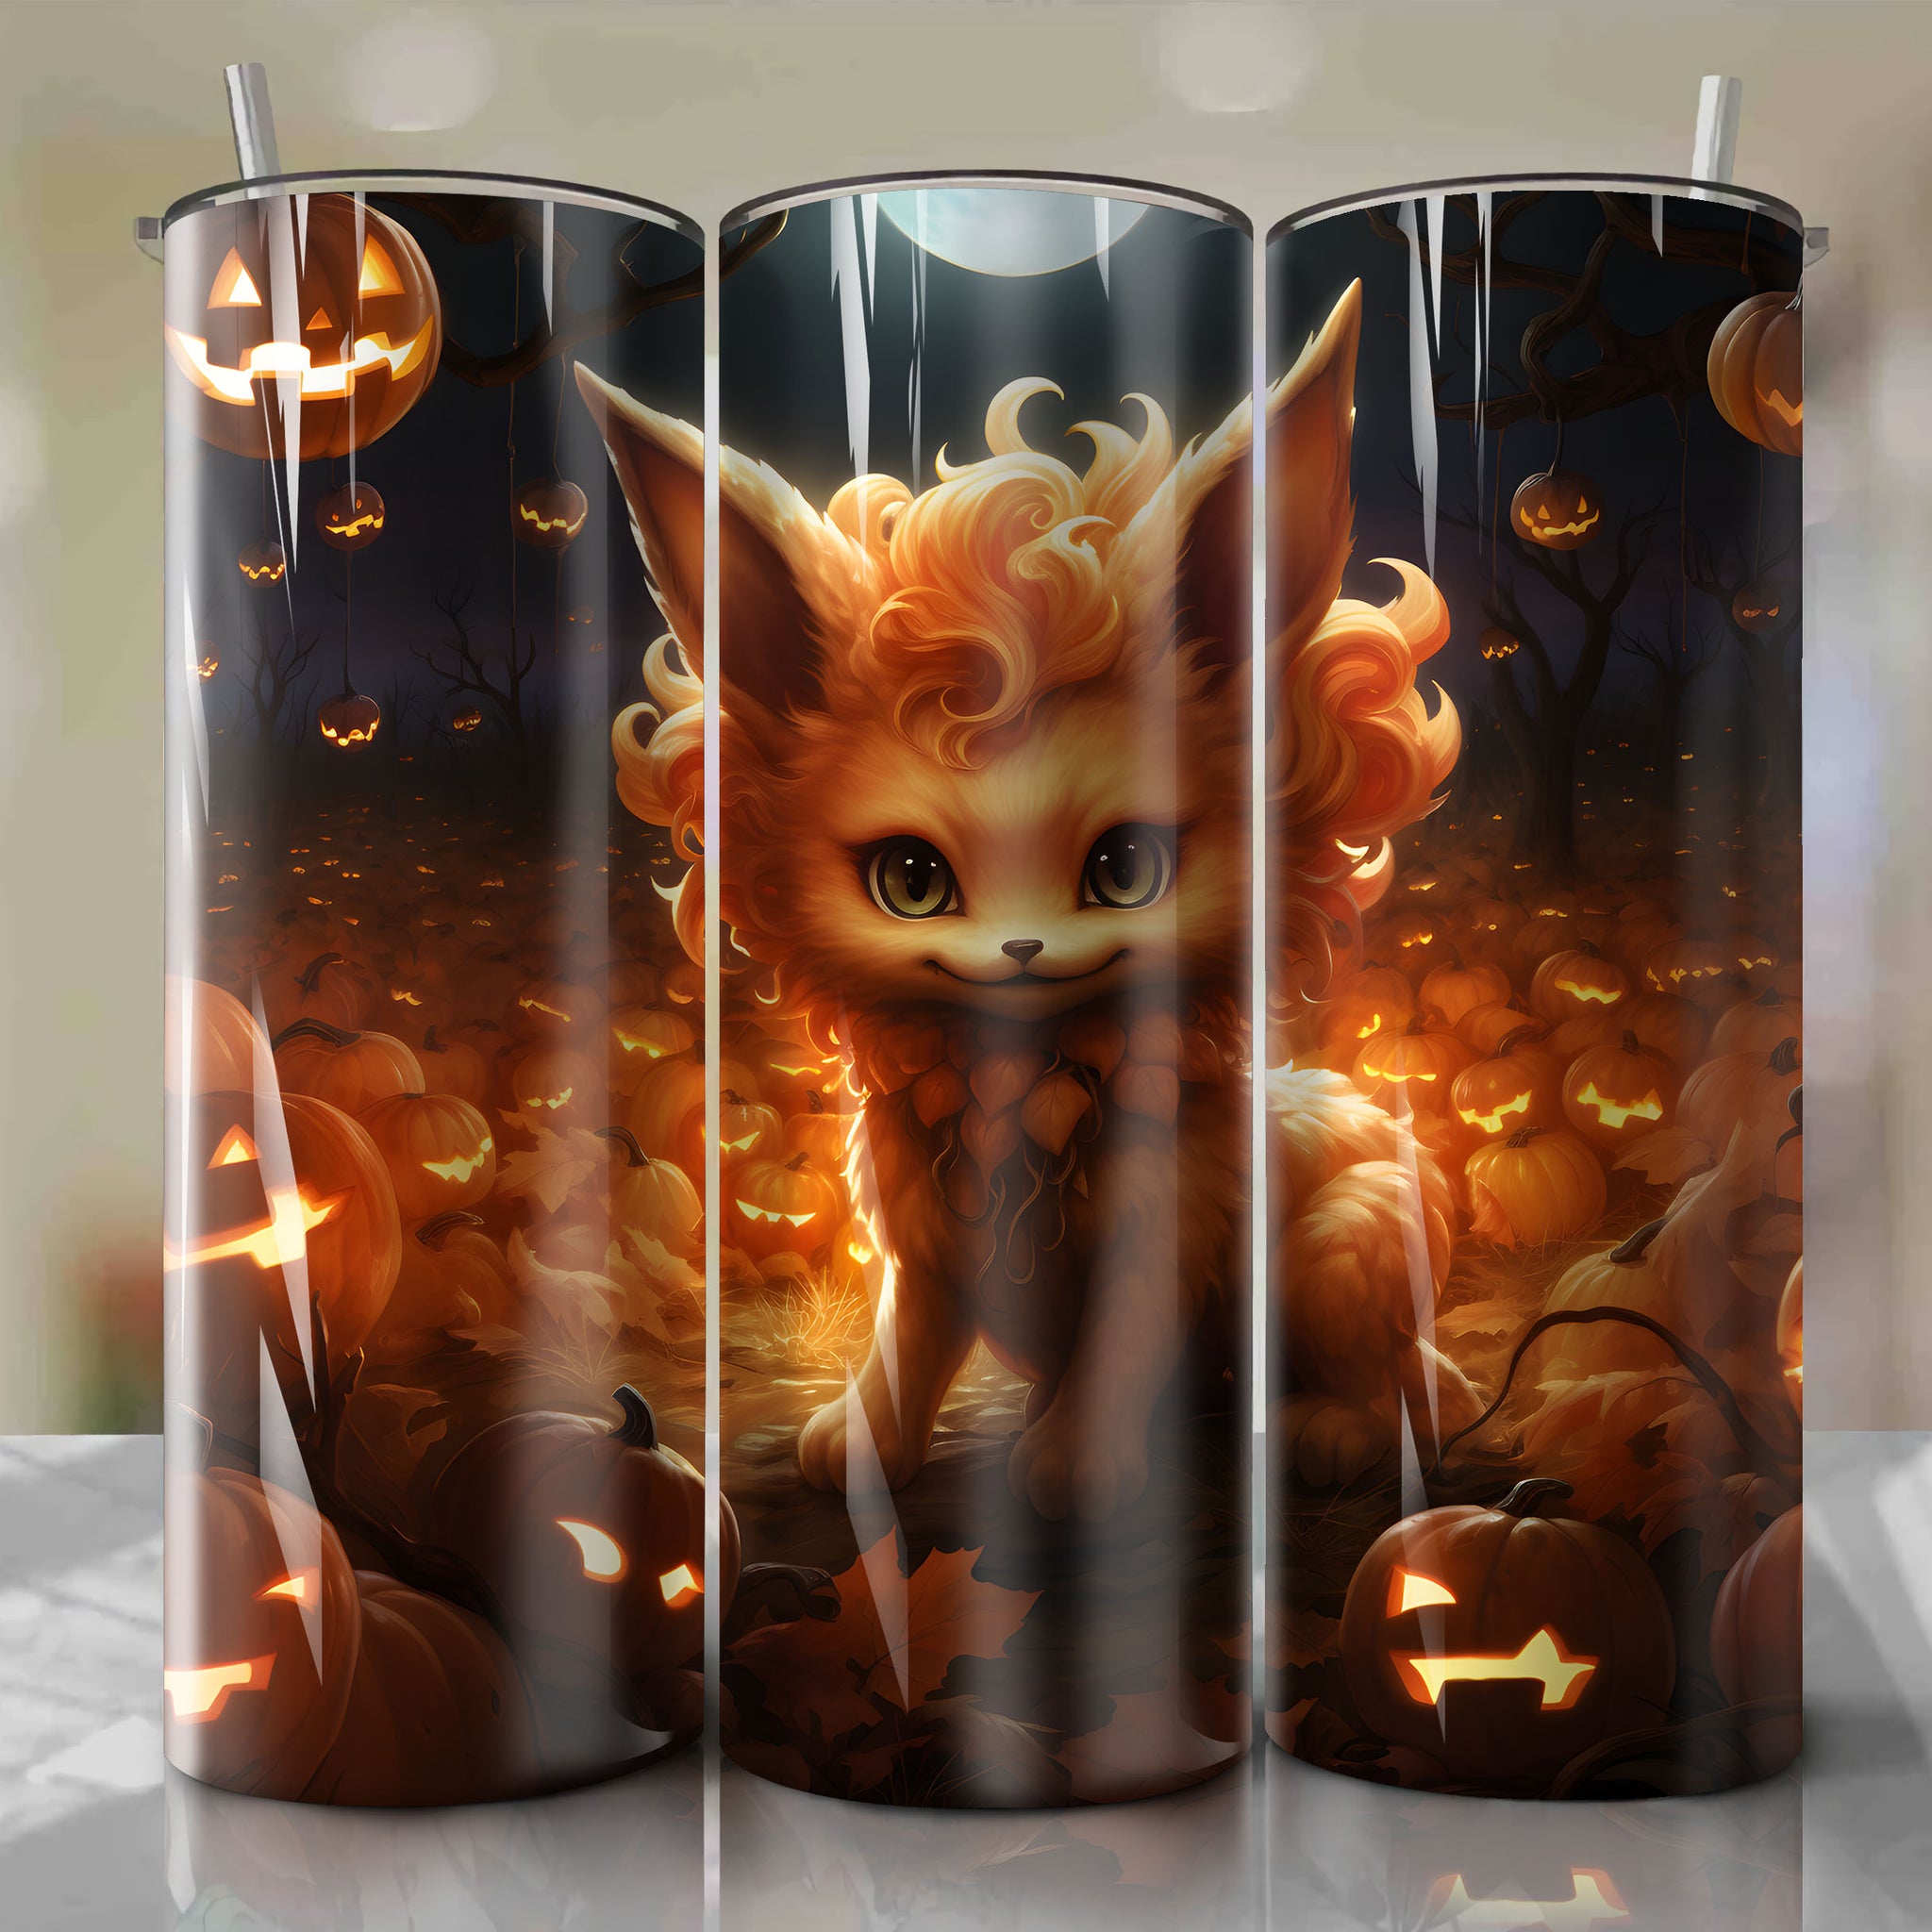 Halloween Vulpix Tumbler Wrap: Glowing Jack-o'-lantern Faces on Haunted Pumpkin Patch Background